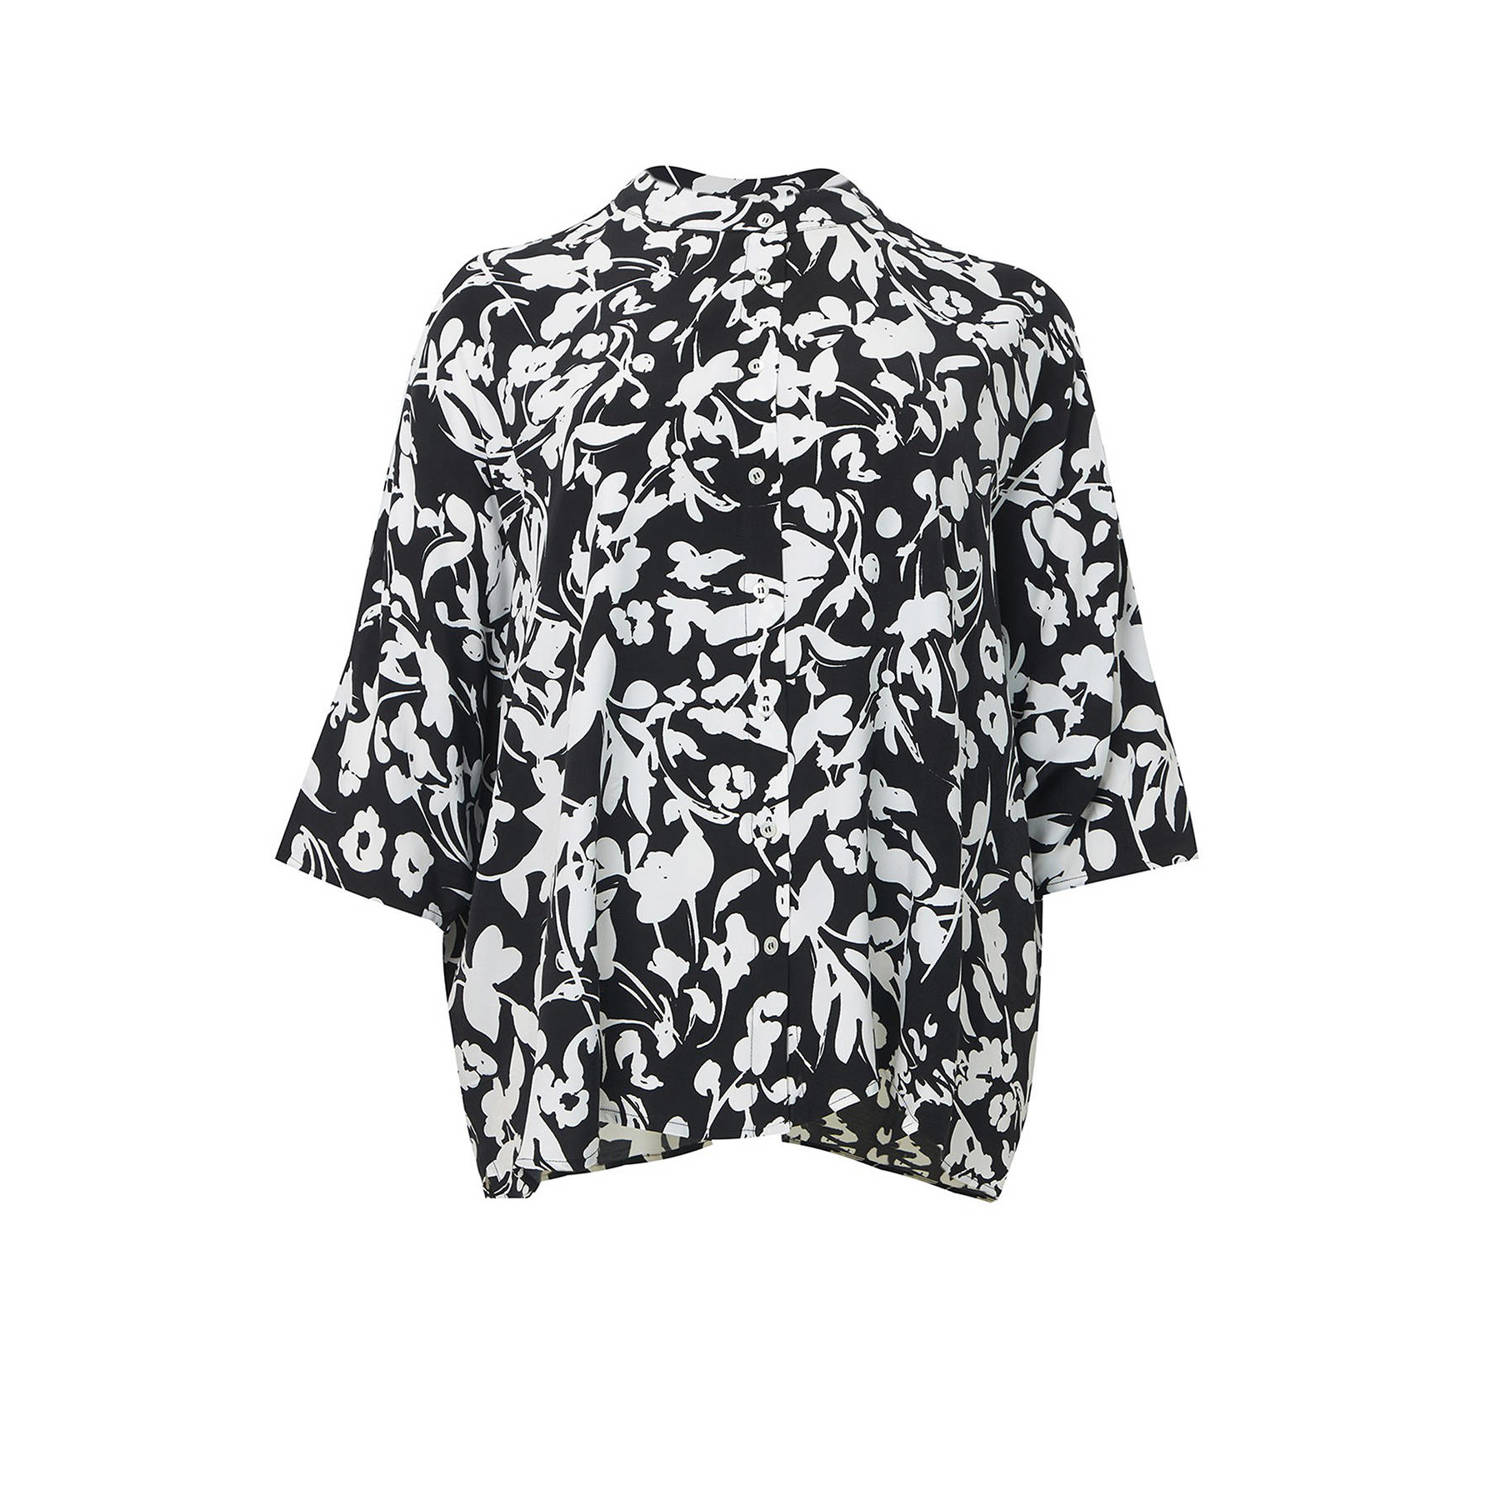 Mat Fashion blouse met all over print zwart wit